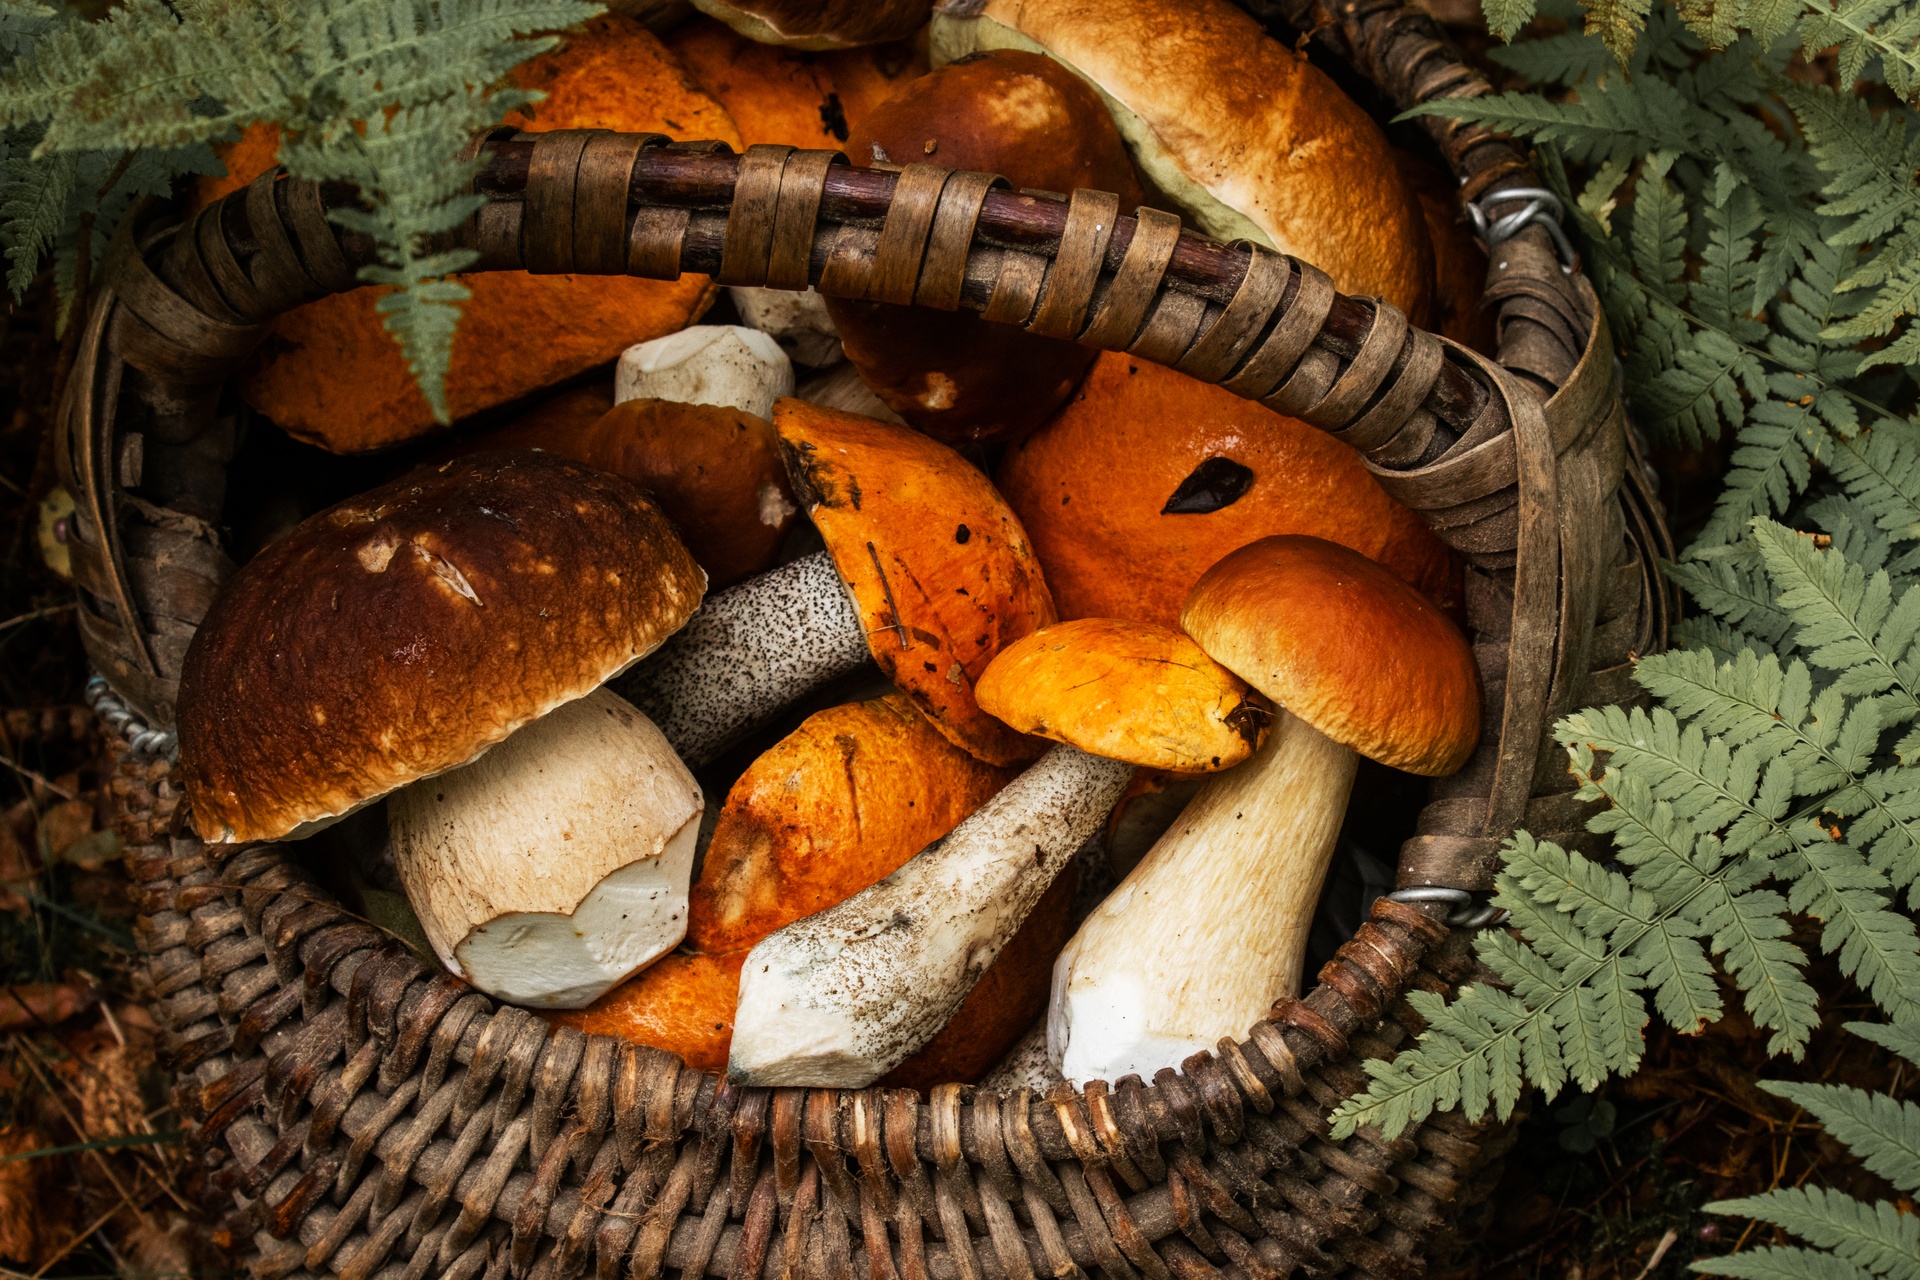 Foraging for mushrooms in West Estonia during the autumn